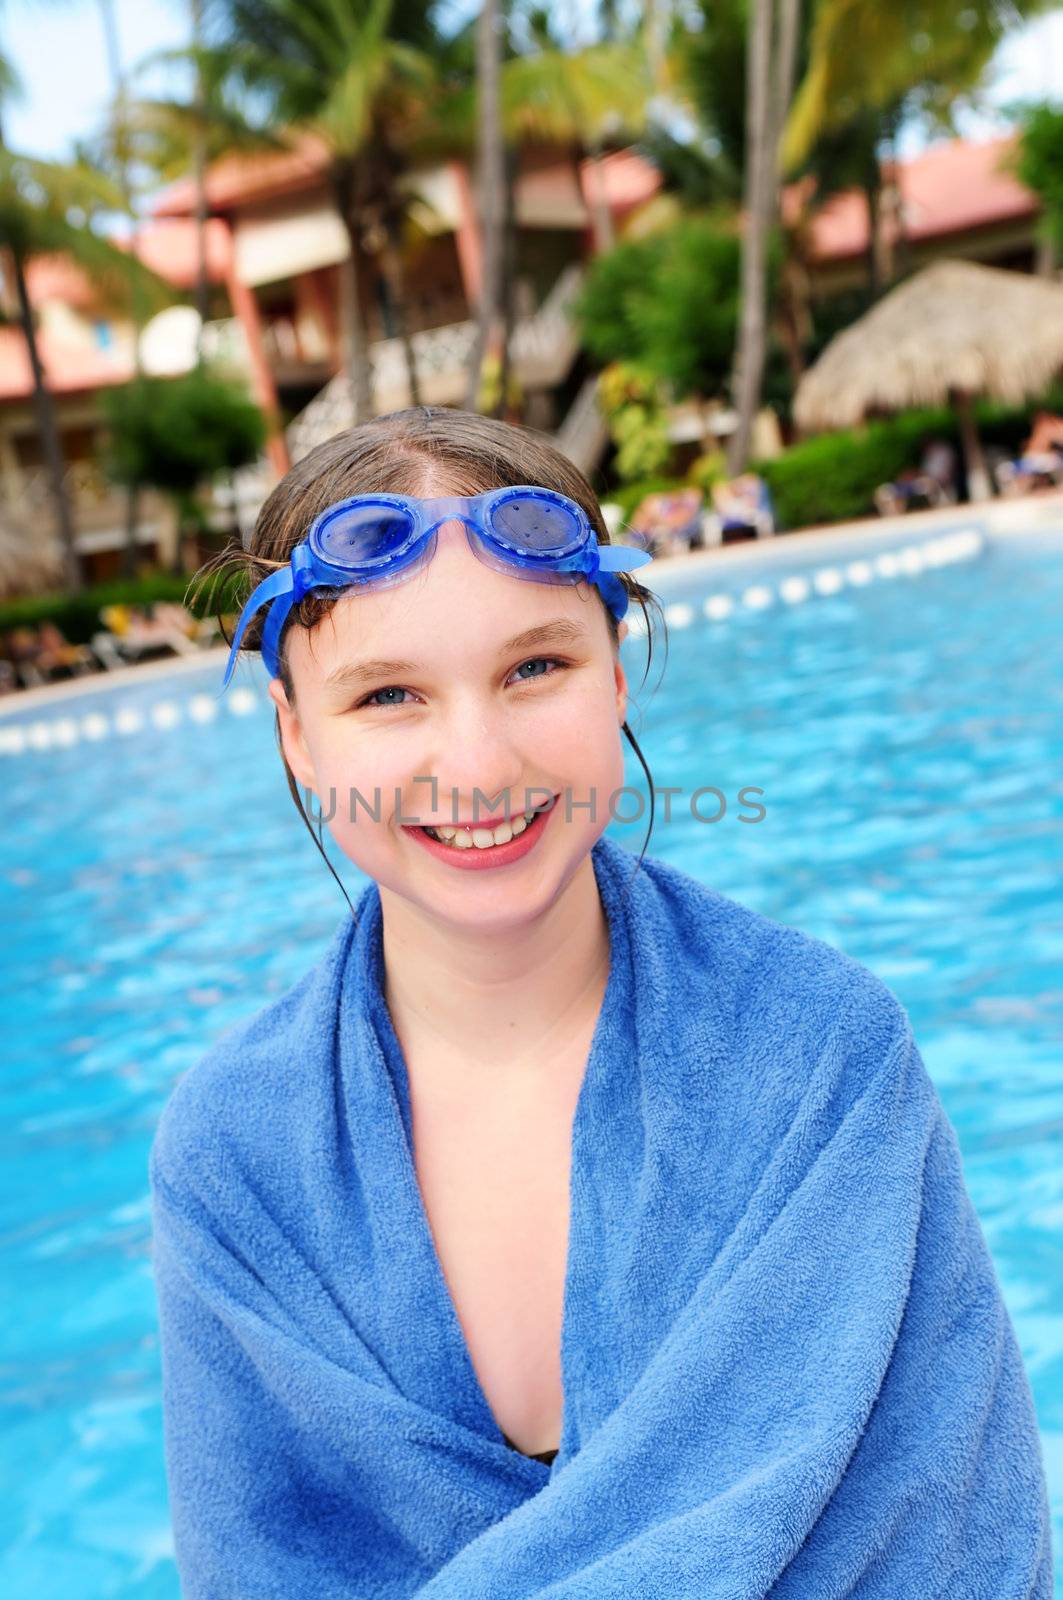 Teenage girl at the swimming pool in tropical resort